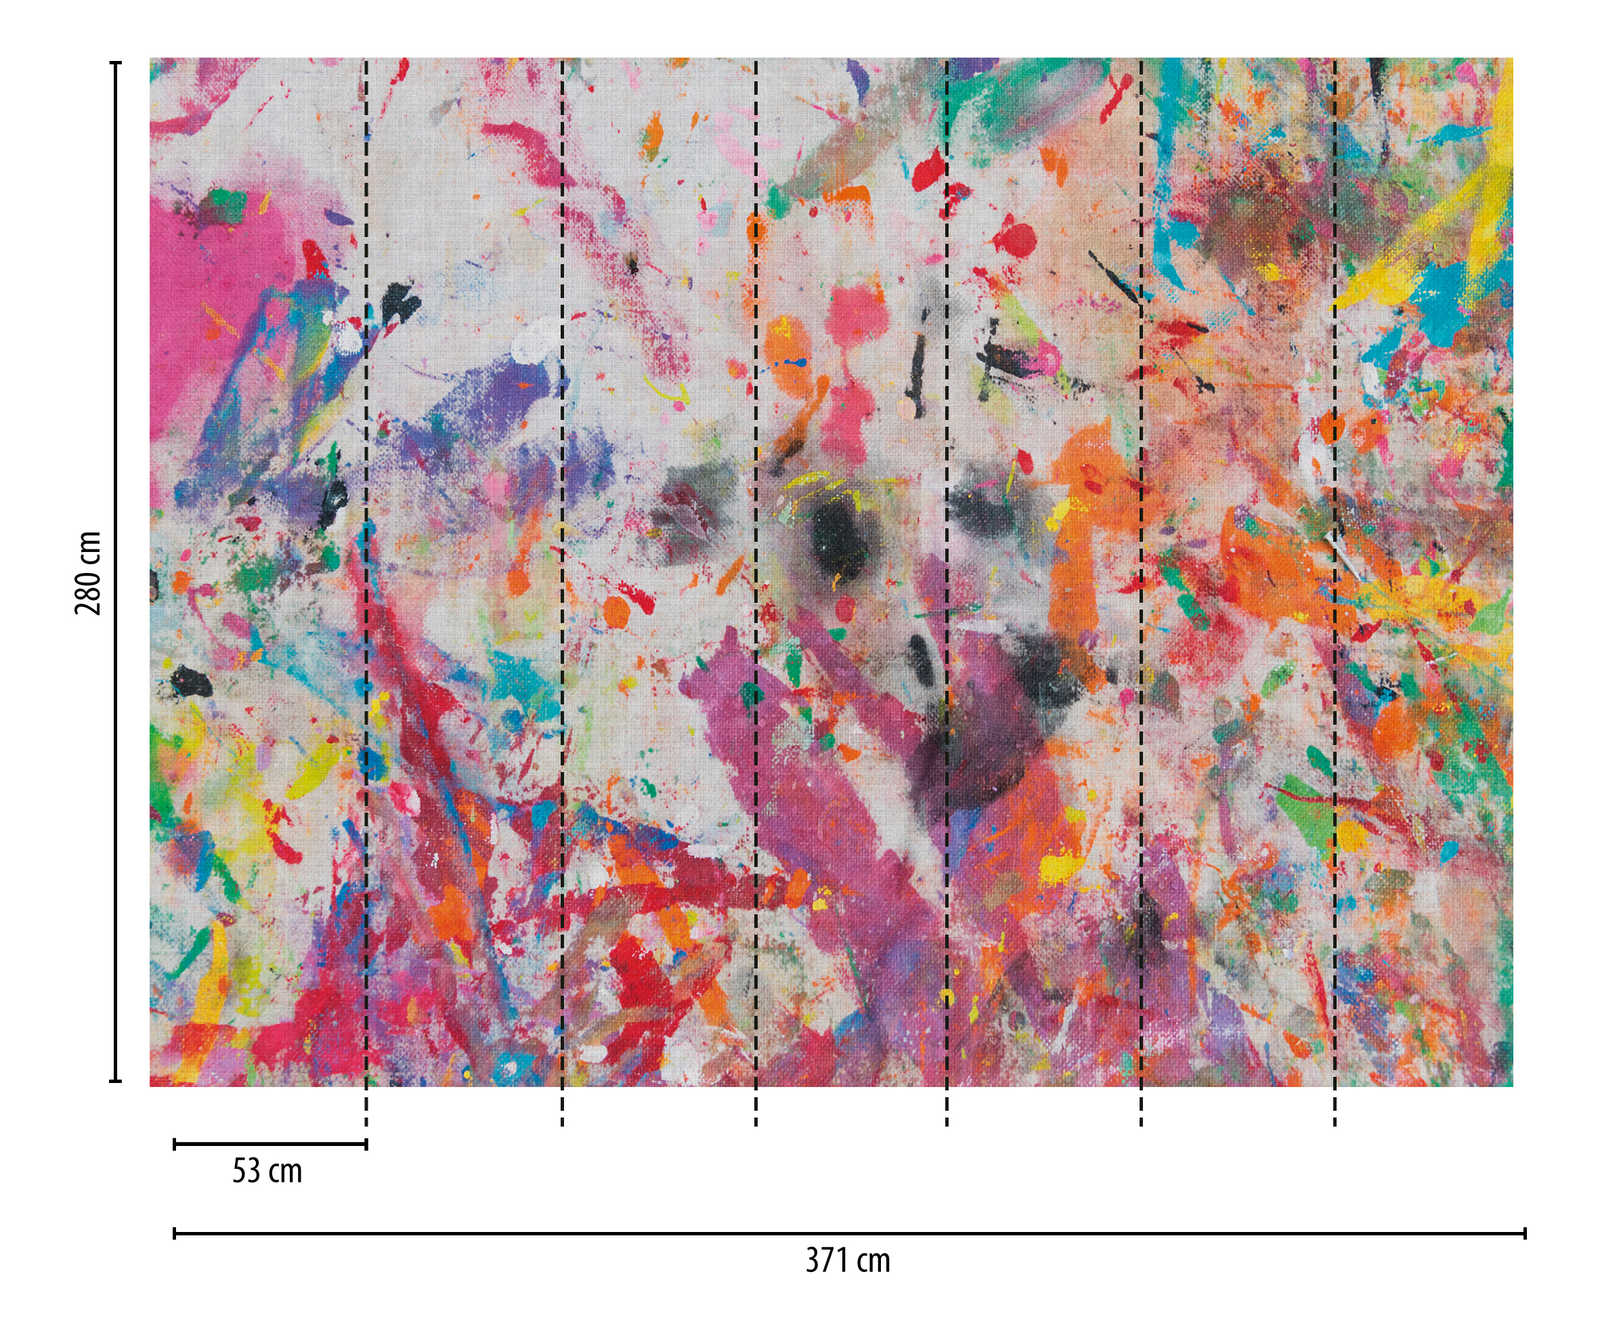             Wallpaper novelty - motif wallpaper colourful canvas, abstract design
        